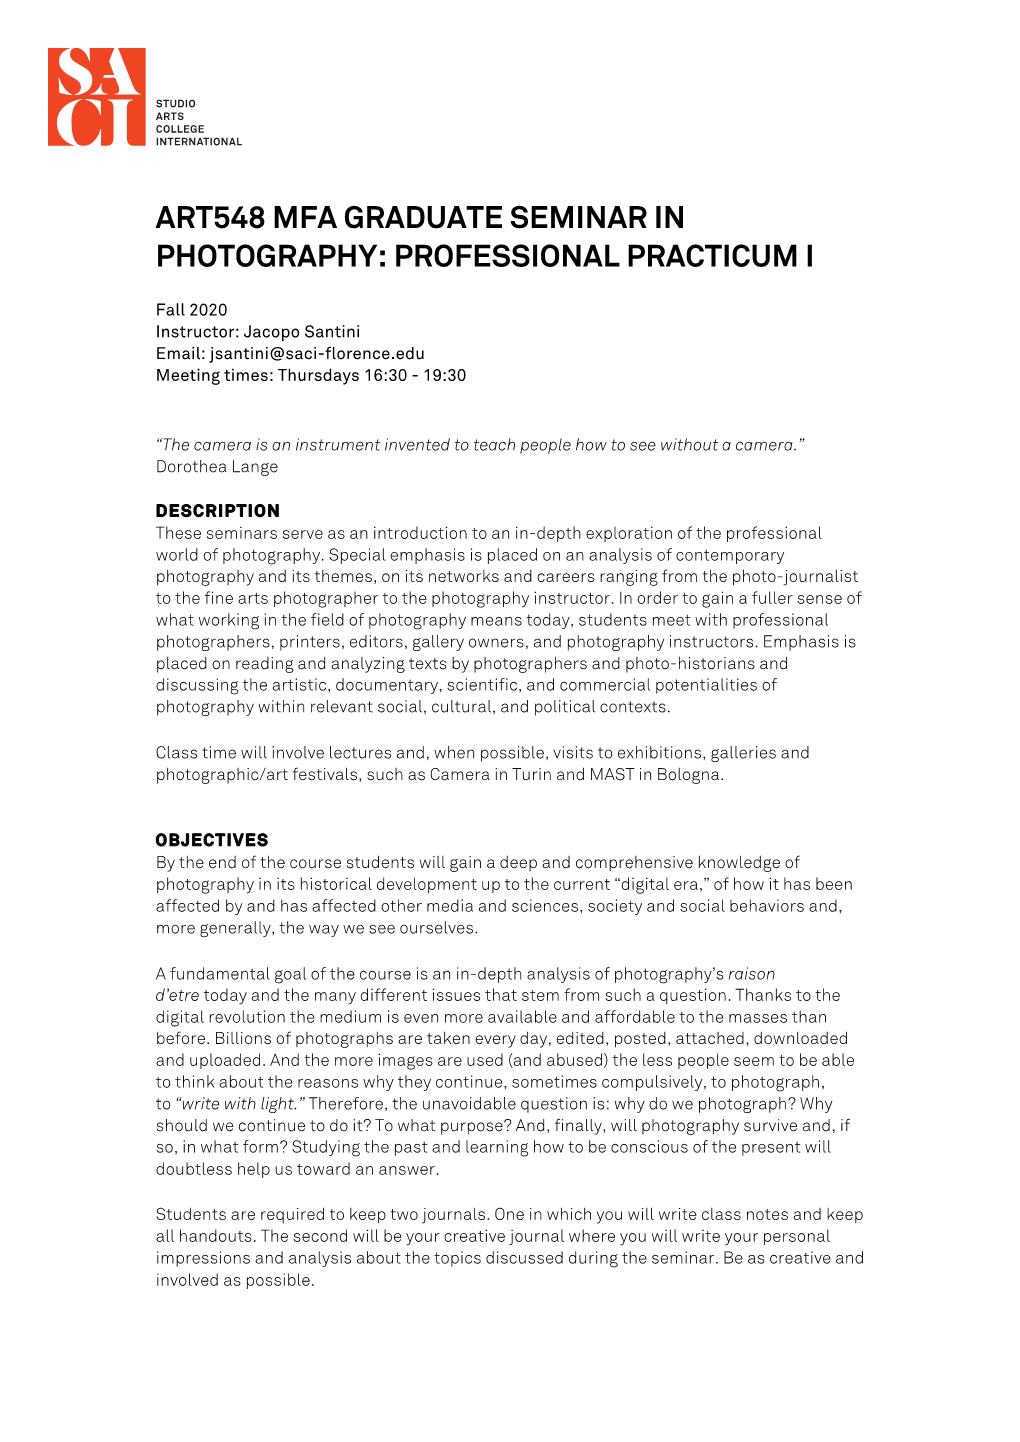 Art548 Mfa Graduate Seminar in Photography: Professional Practicum I